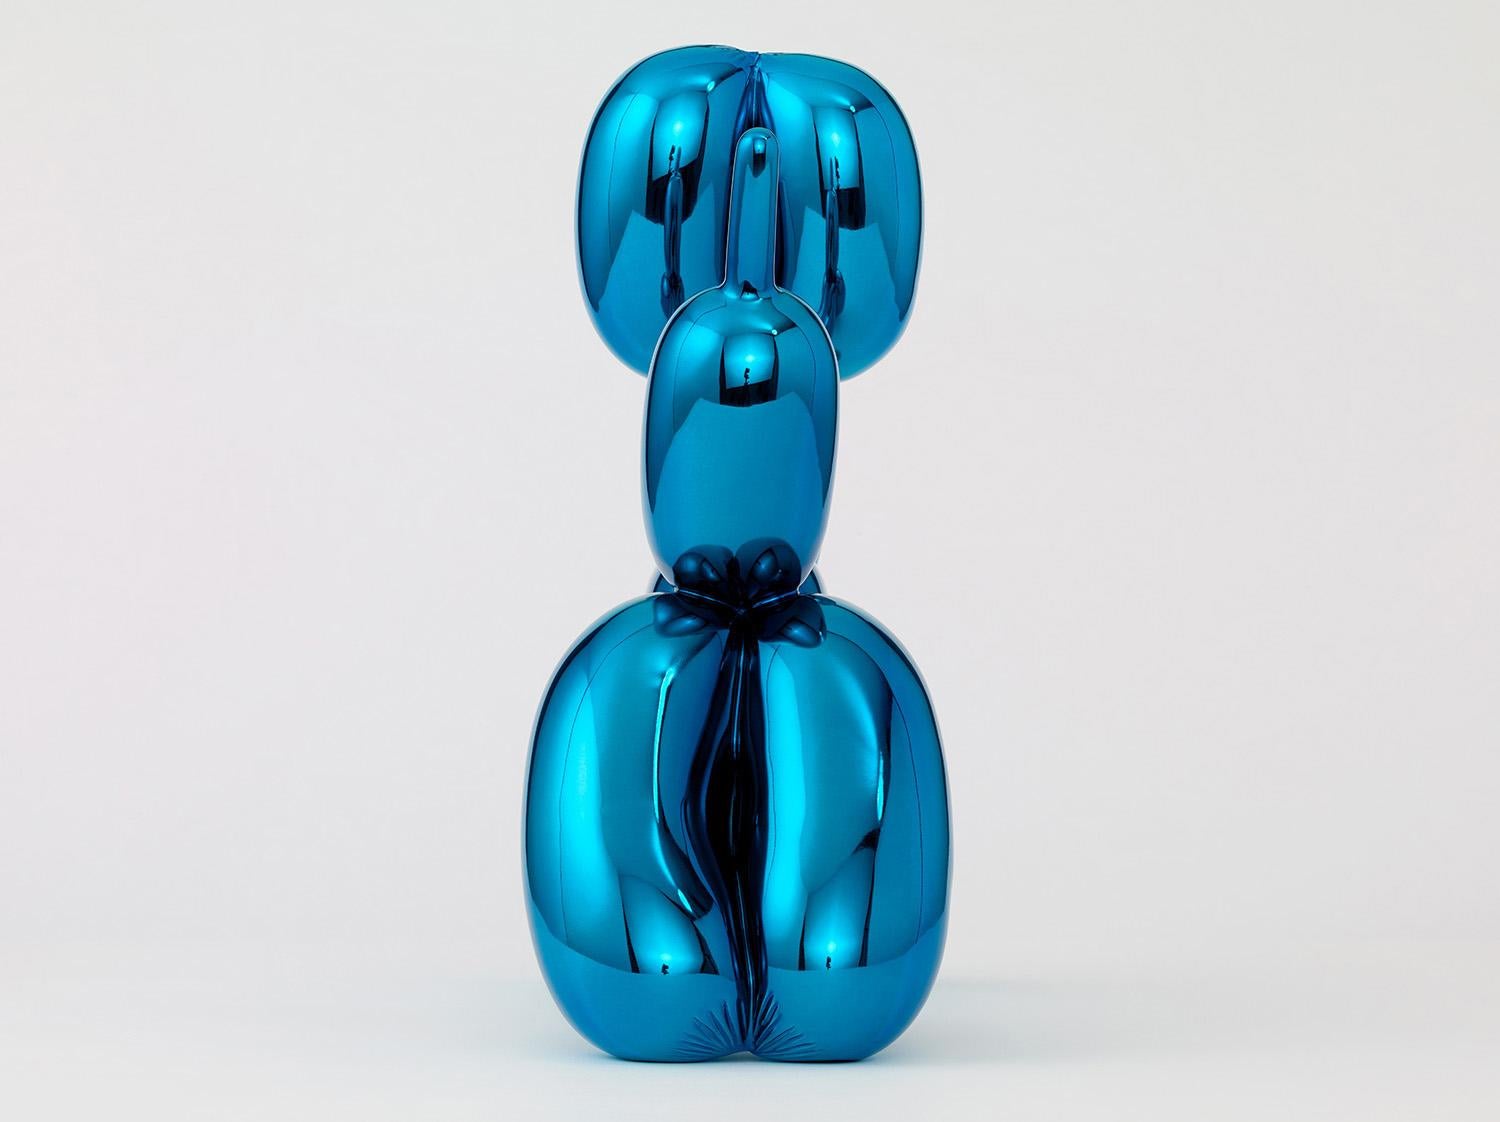 Balloon Dog (Blue) - Gray Still-Life Sculpture by Jeff Koons